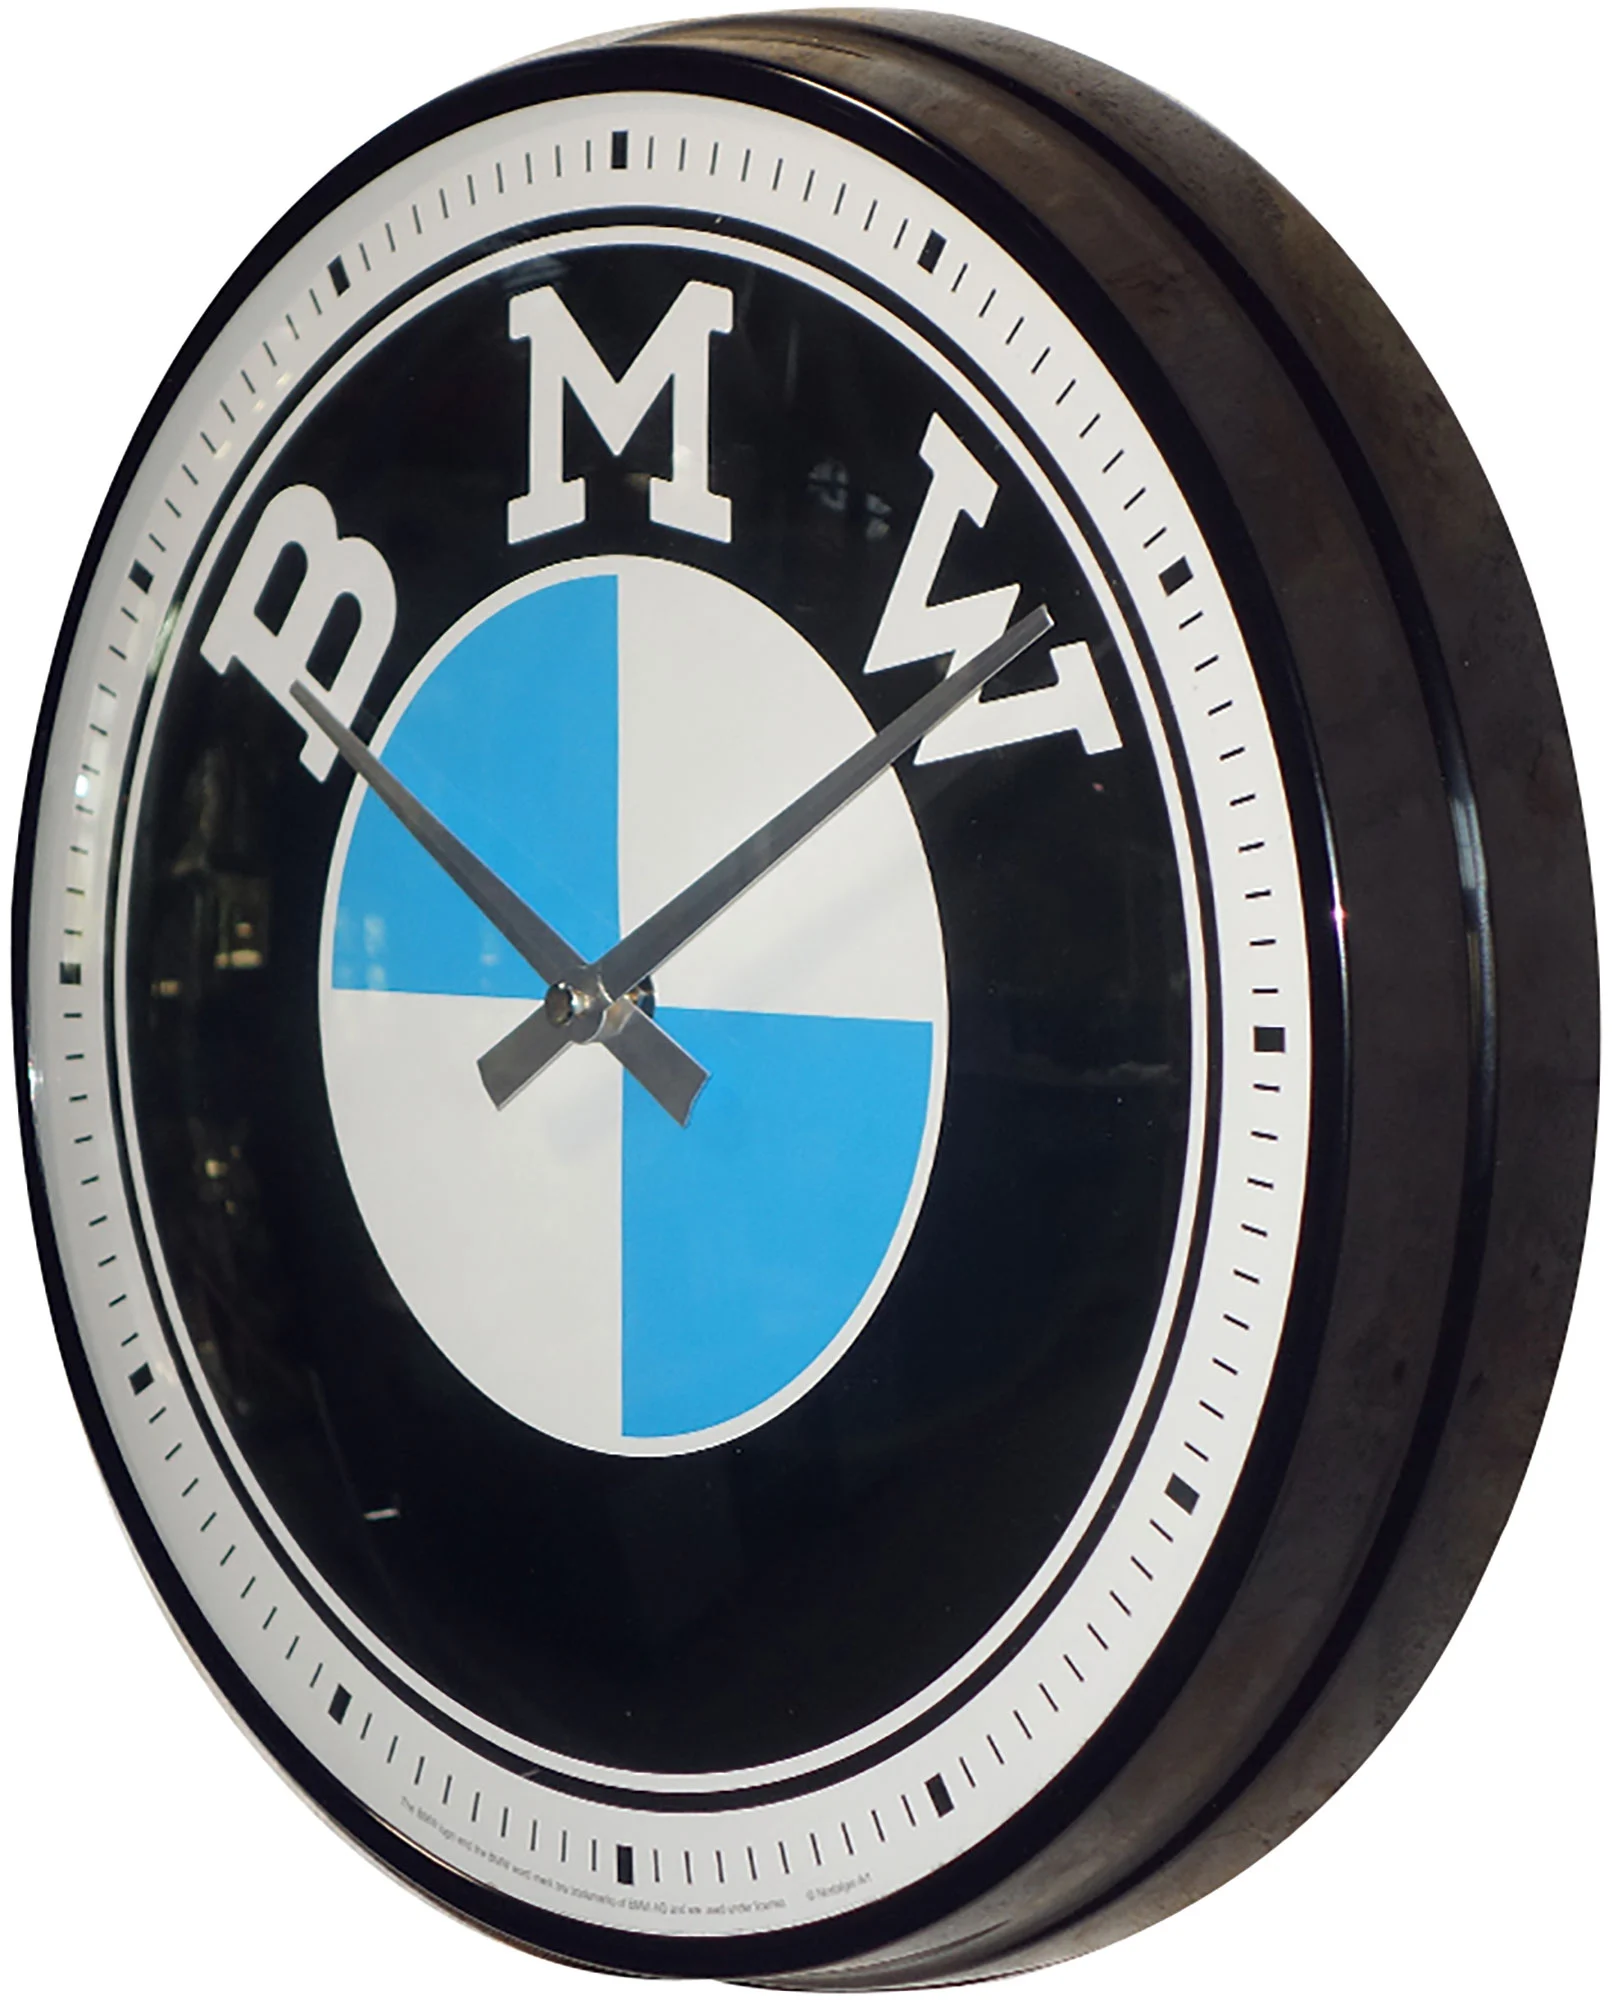 Nostalgic Art Wanduhr BMW Logo Ø 31 cm, Blau/Schwarz/Weiss